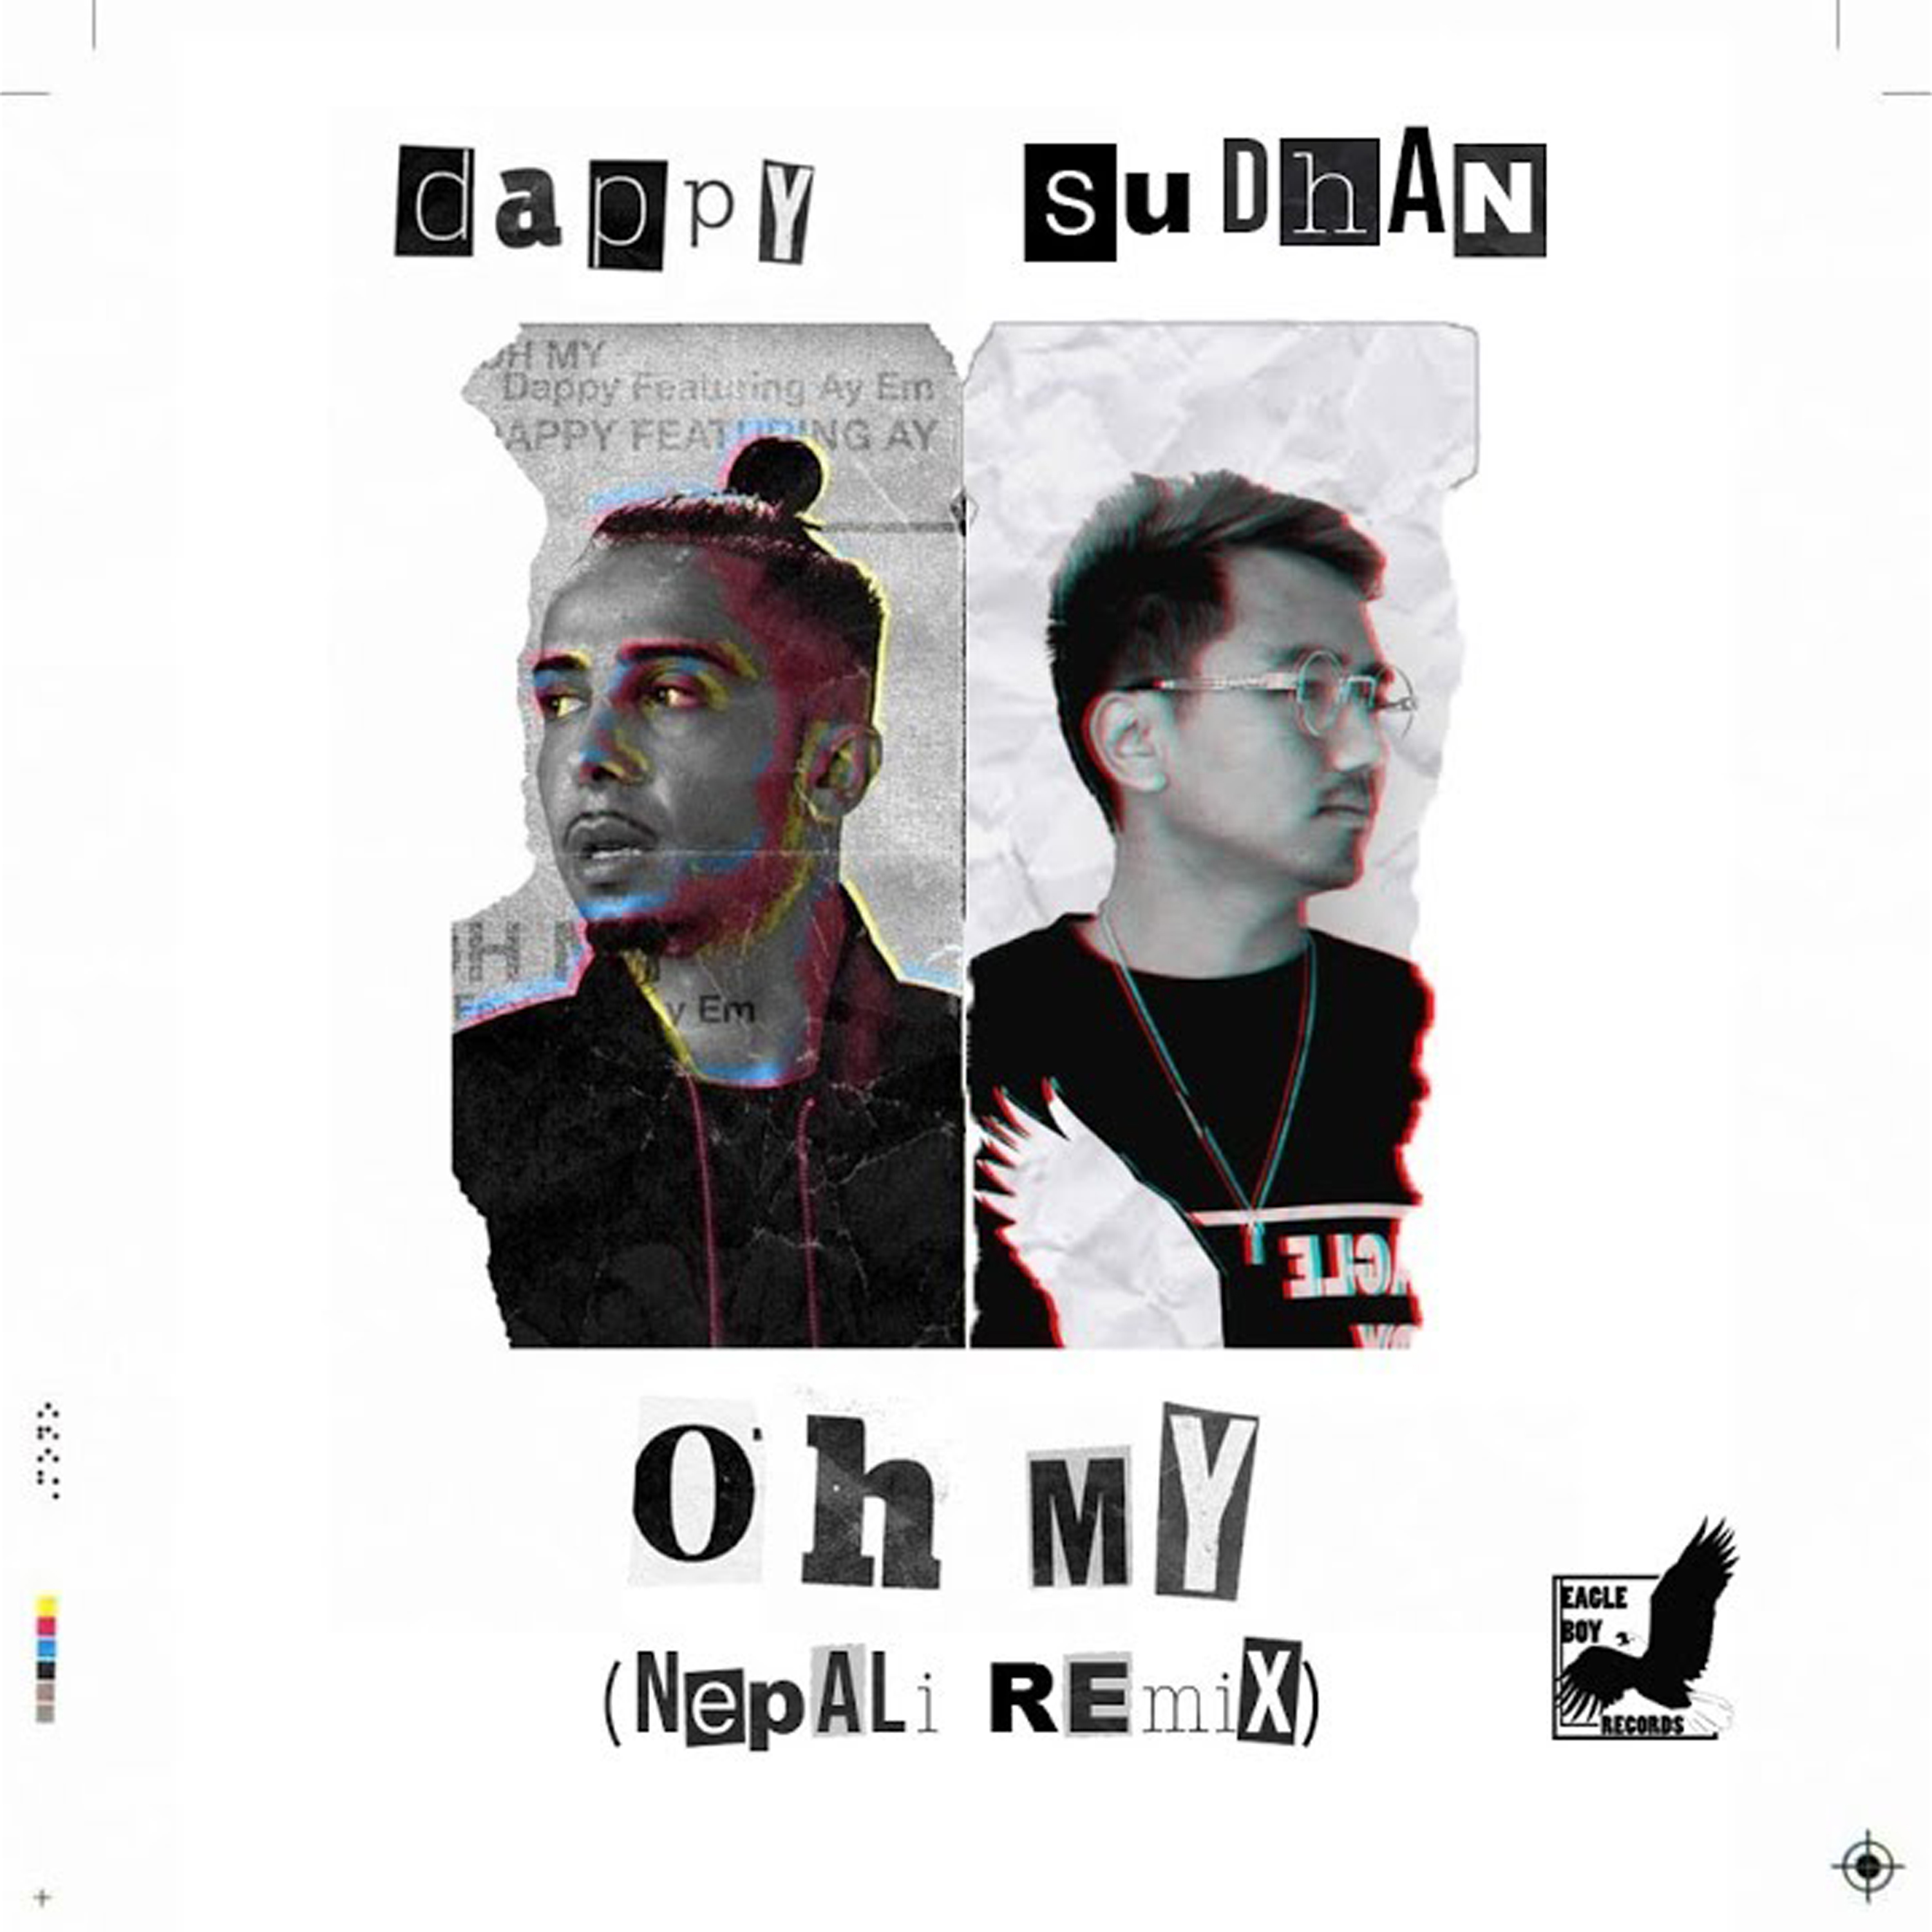 Oh My Nepali Remix single artwork Sudhan Gurung website